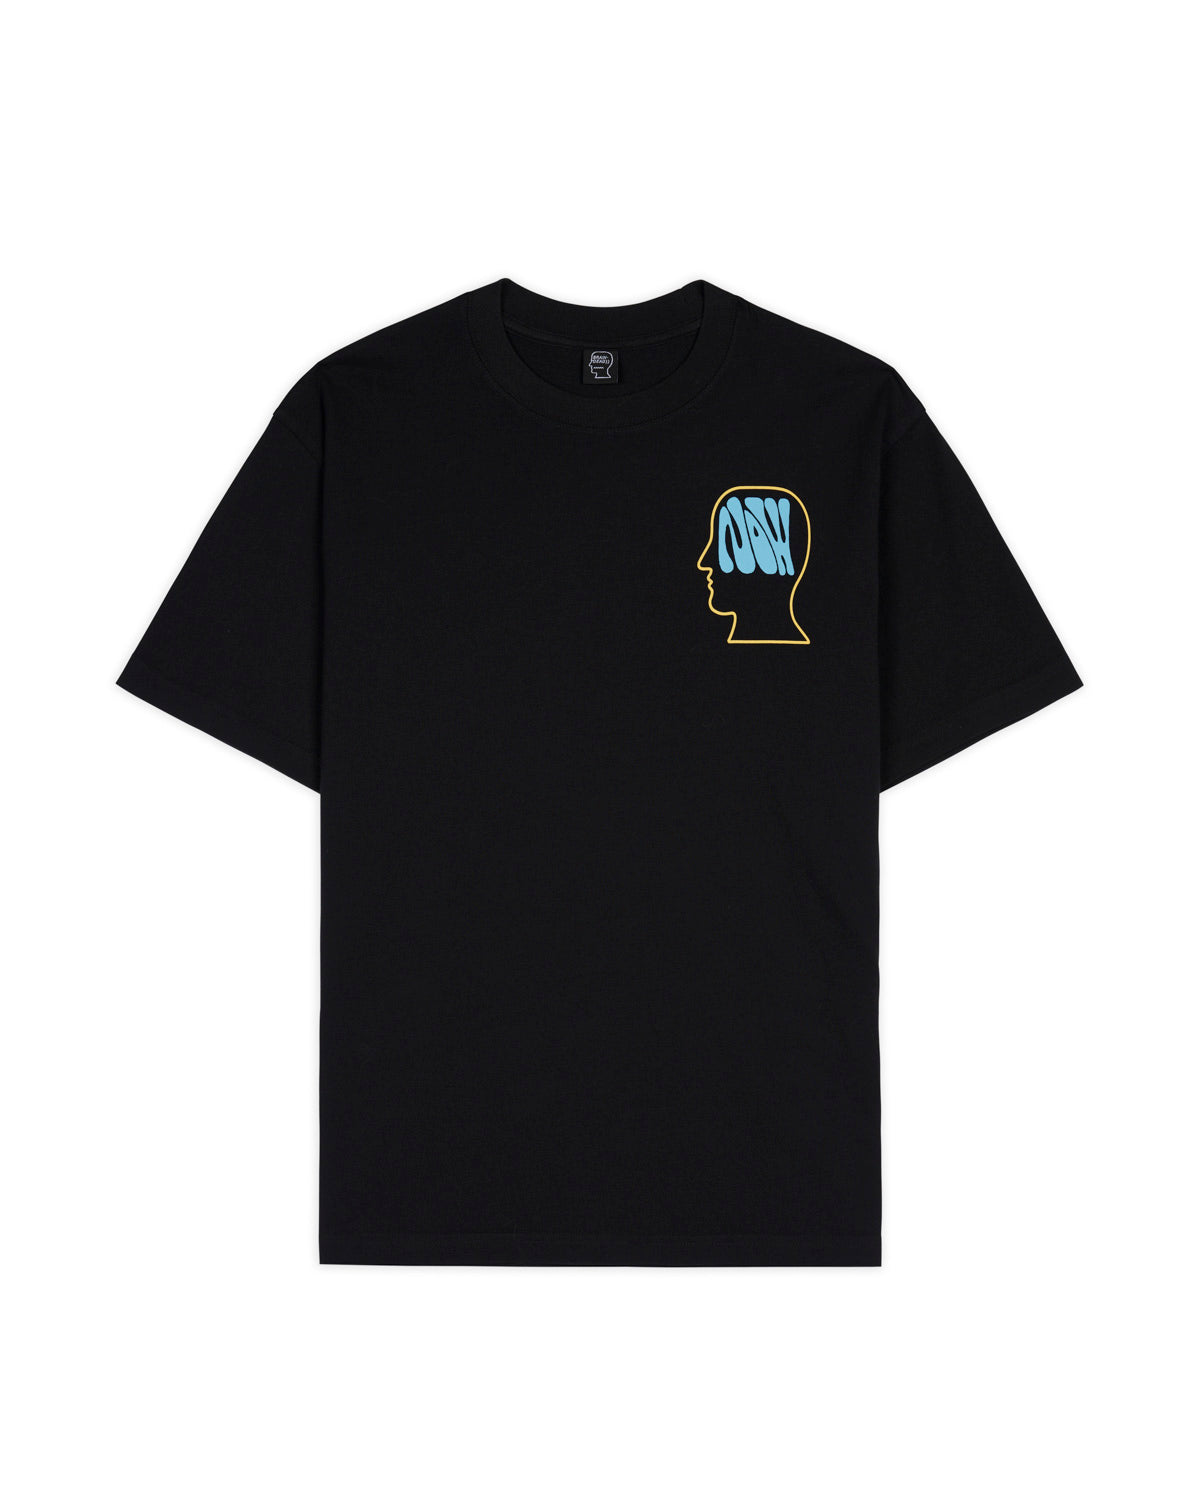 NOLA BRAINS T-Shirt (Black)